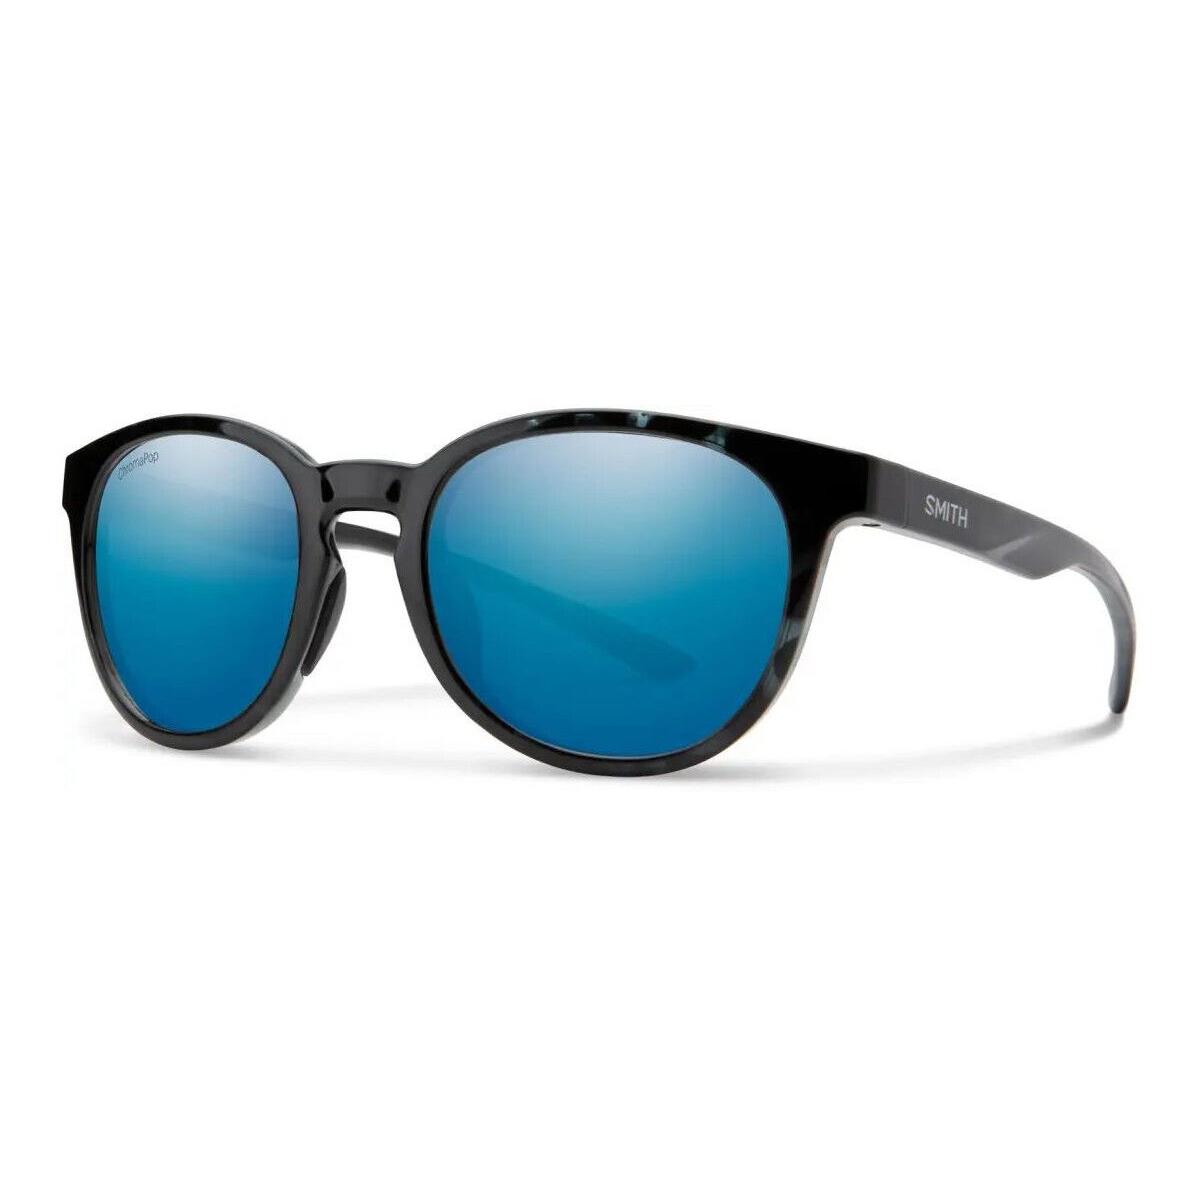 Smith Optics Eastbank Sunglasses - Chromapop Polarized Lenses - Frame: